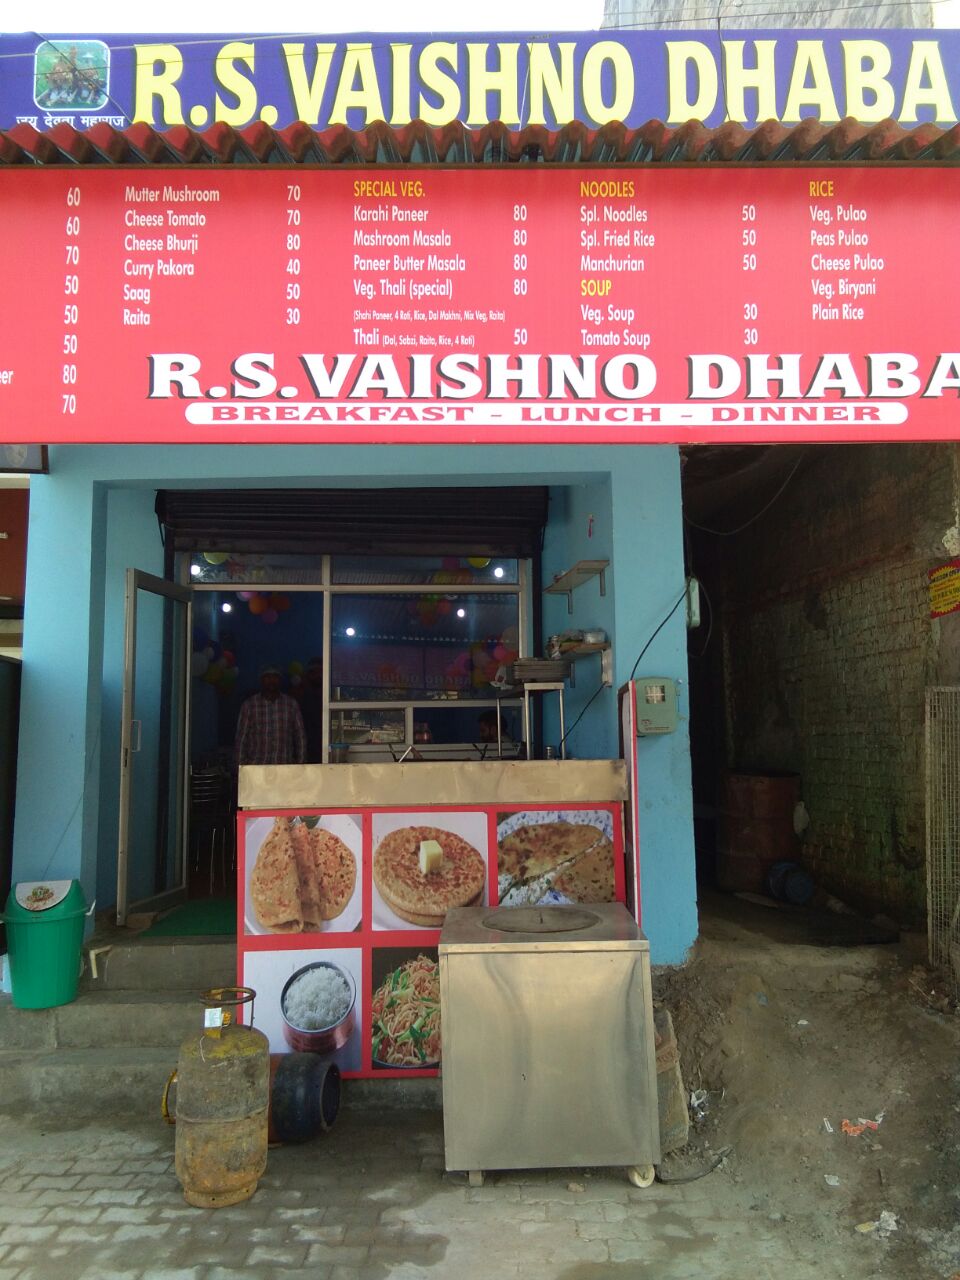 R.S Vashno Dhaba